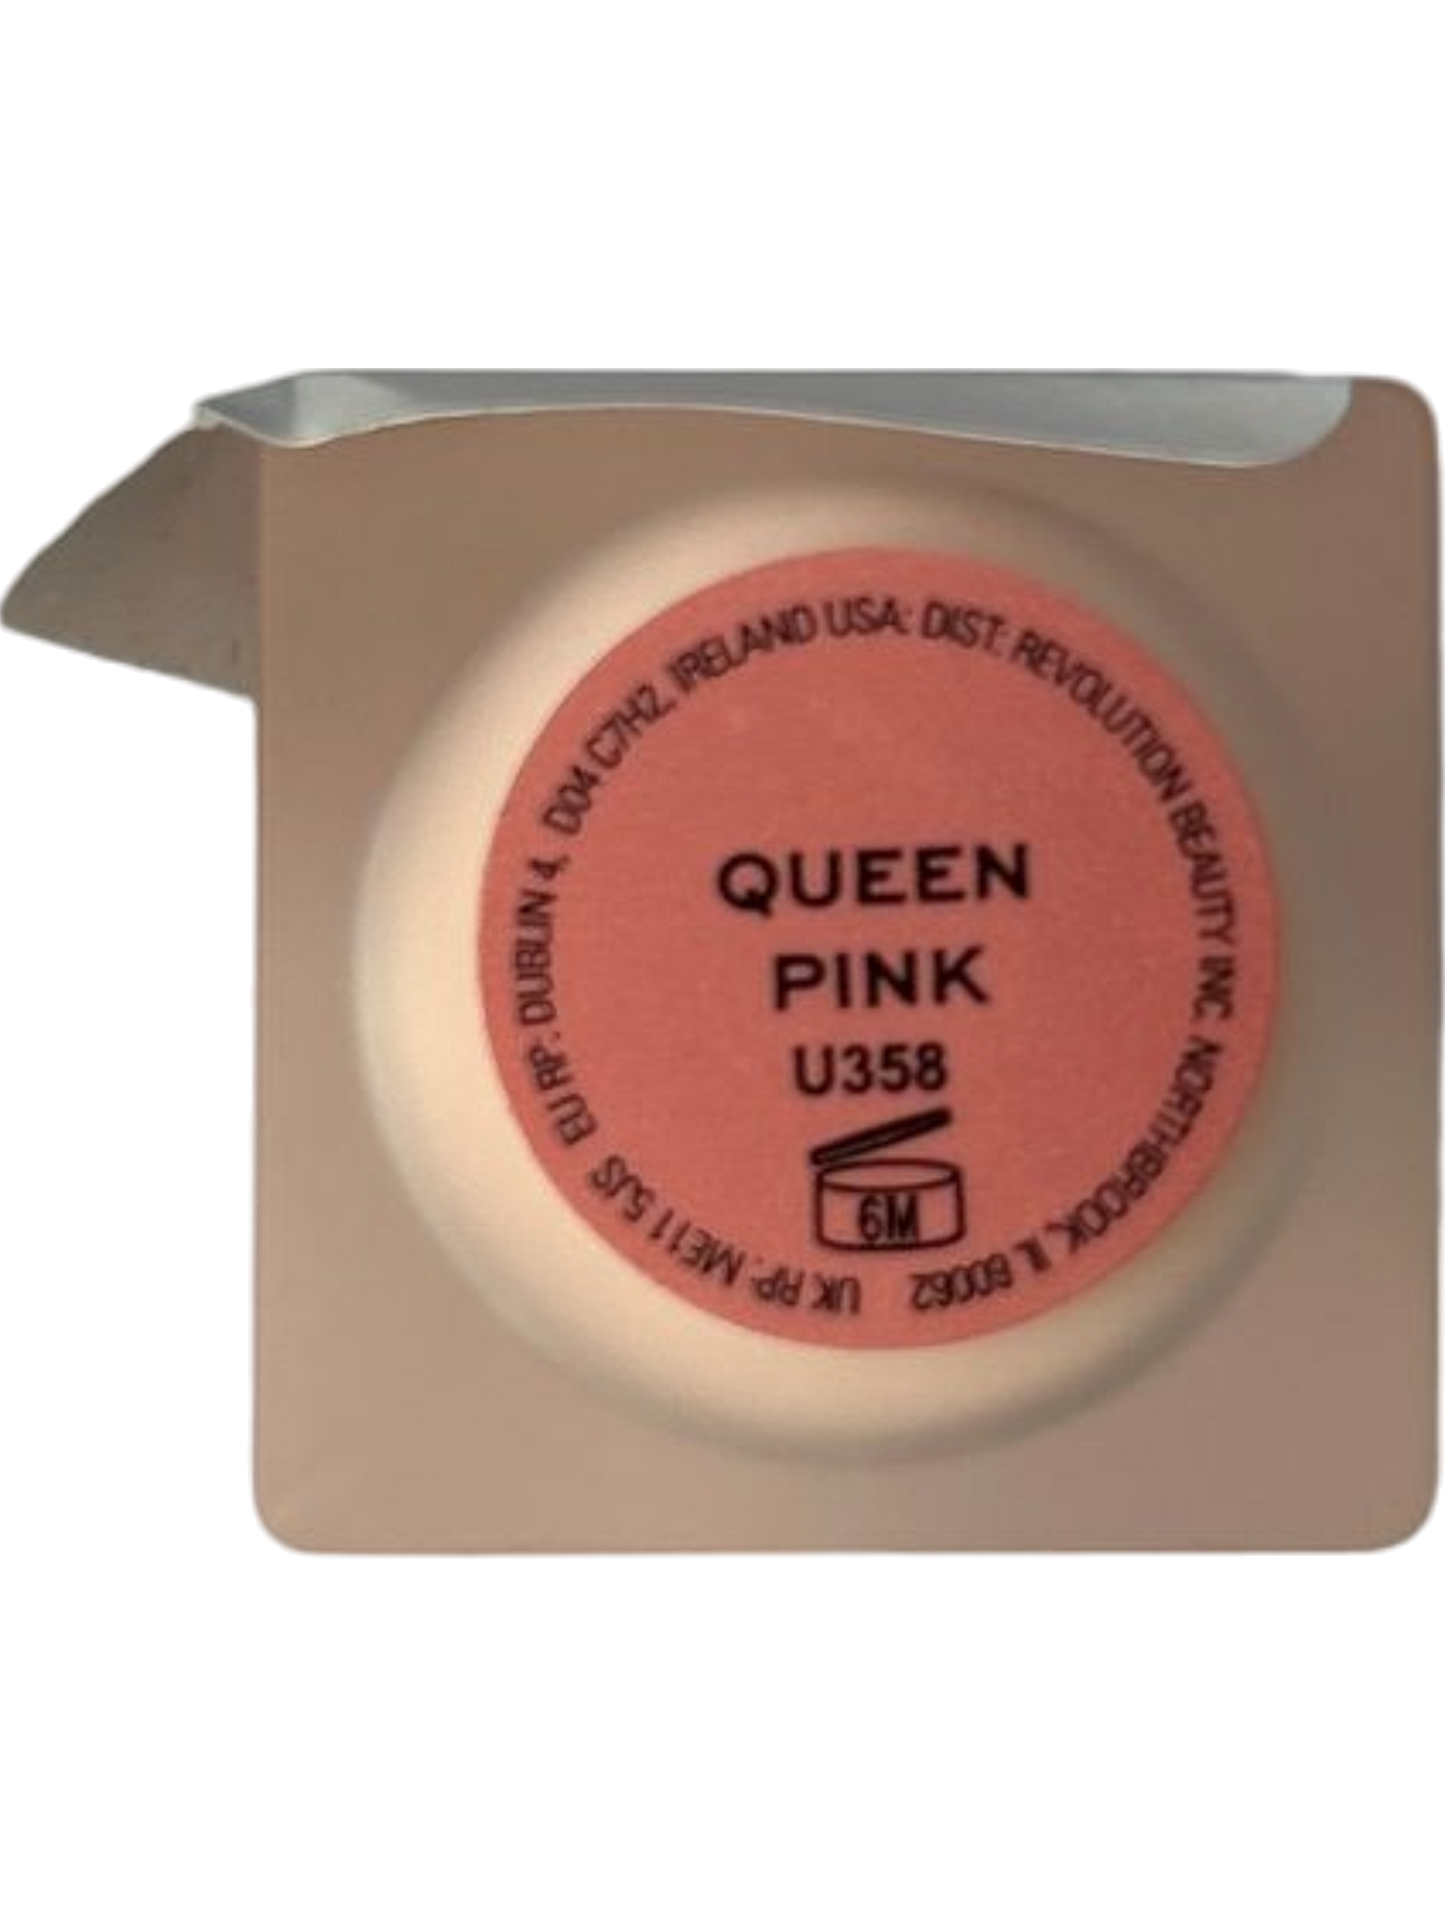 Makeup Revolution Queen Pink Lip Allure Soft Satin Lipstick